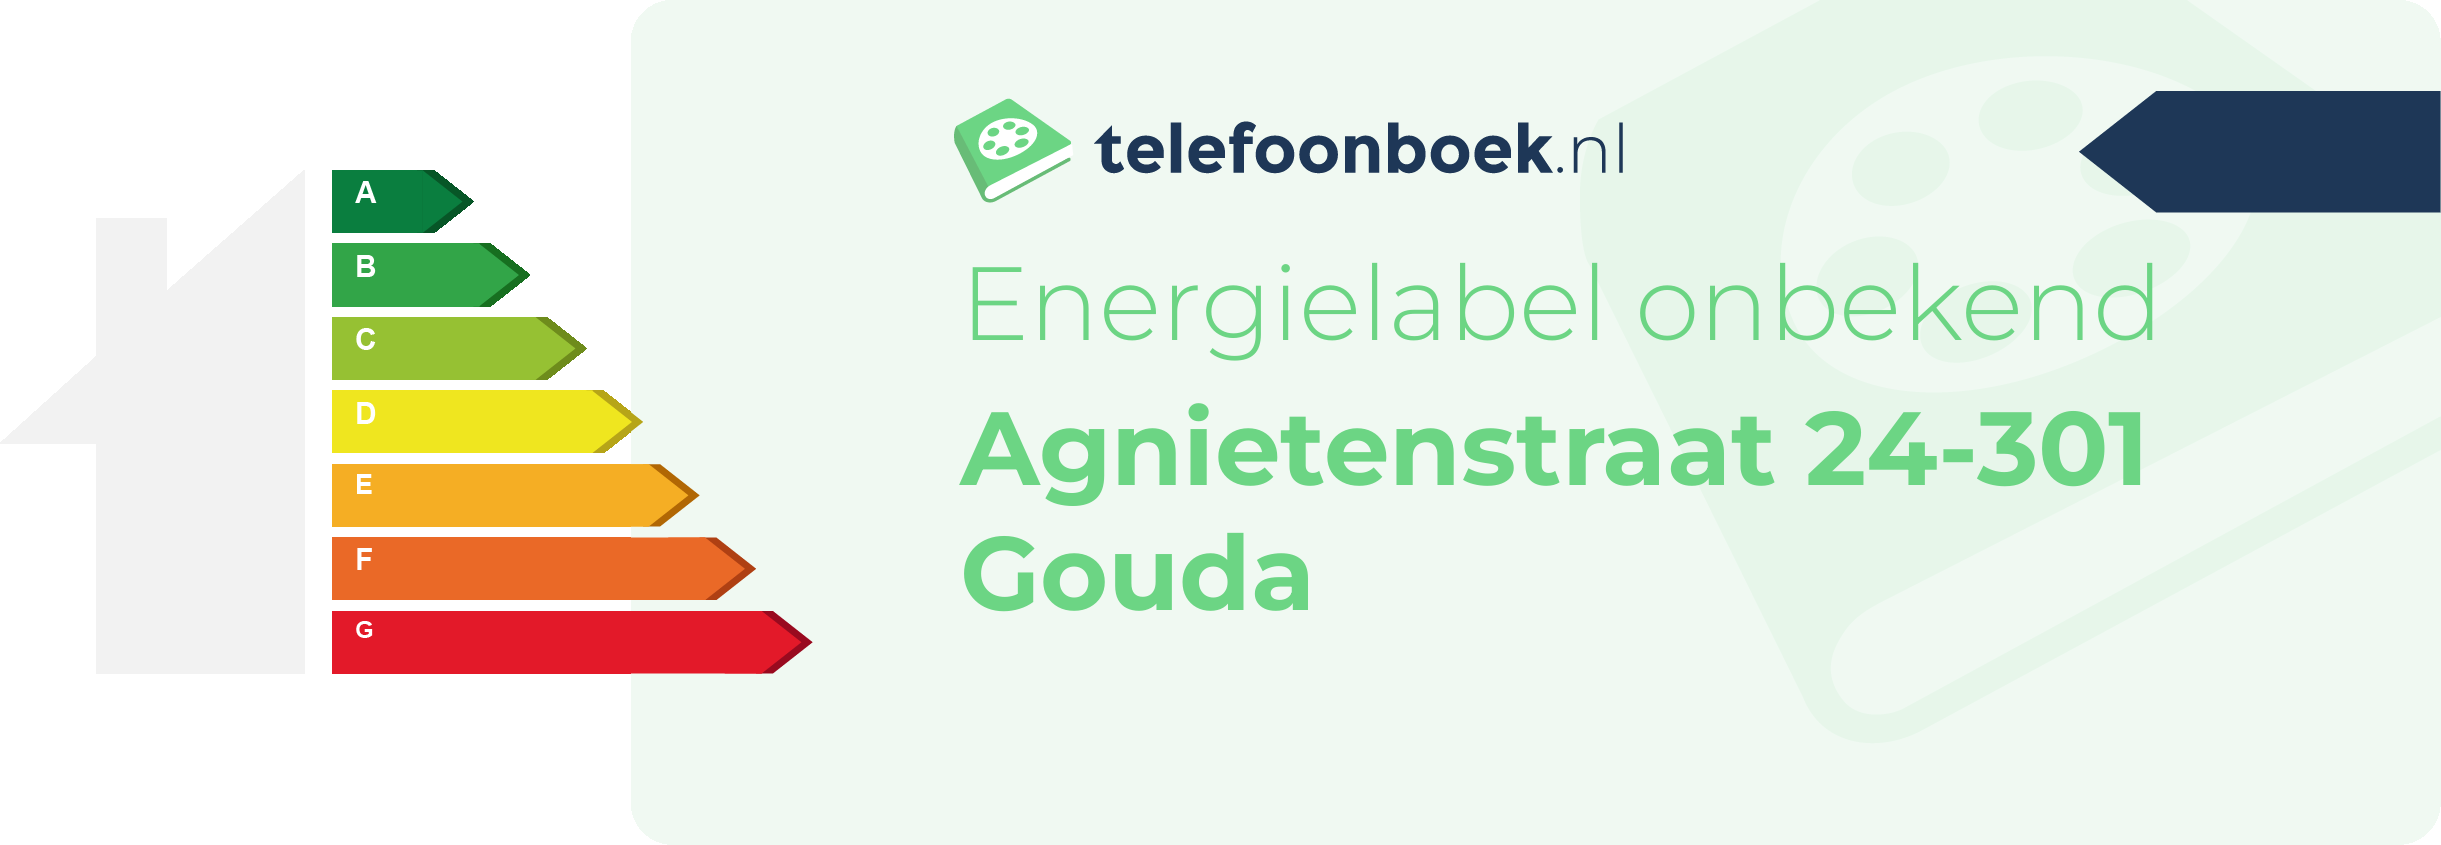 Energielabel Agnietenstraat 24-301 Gouda